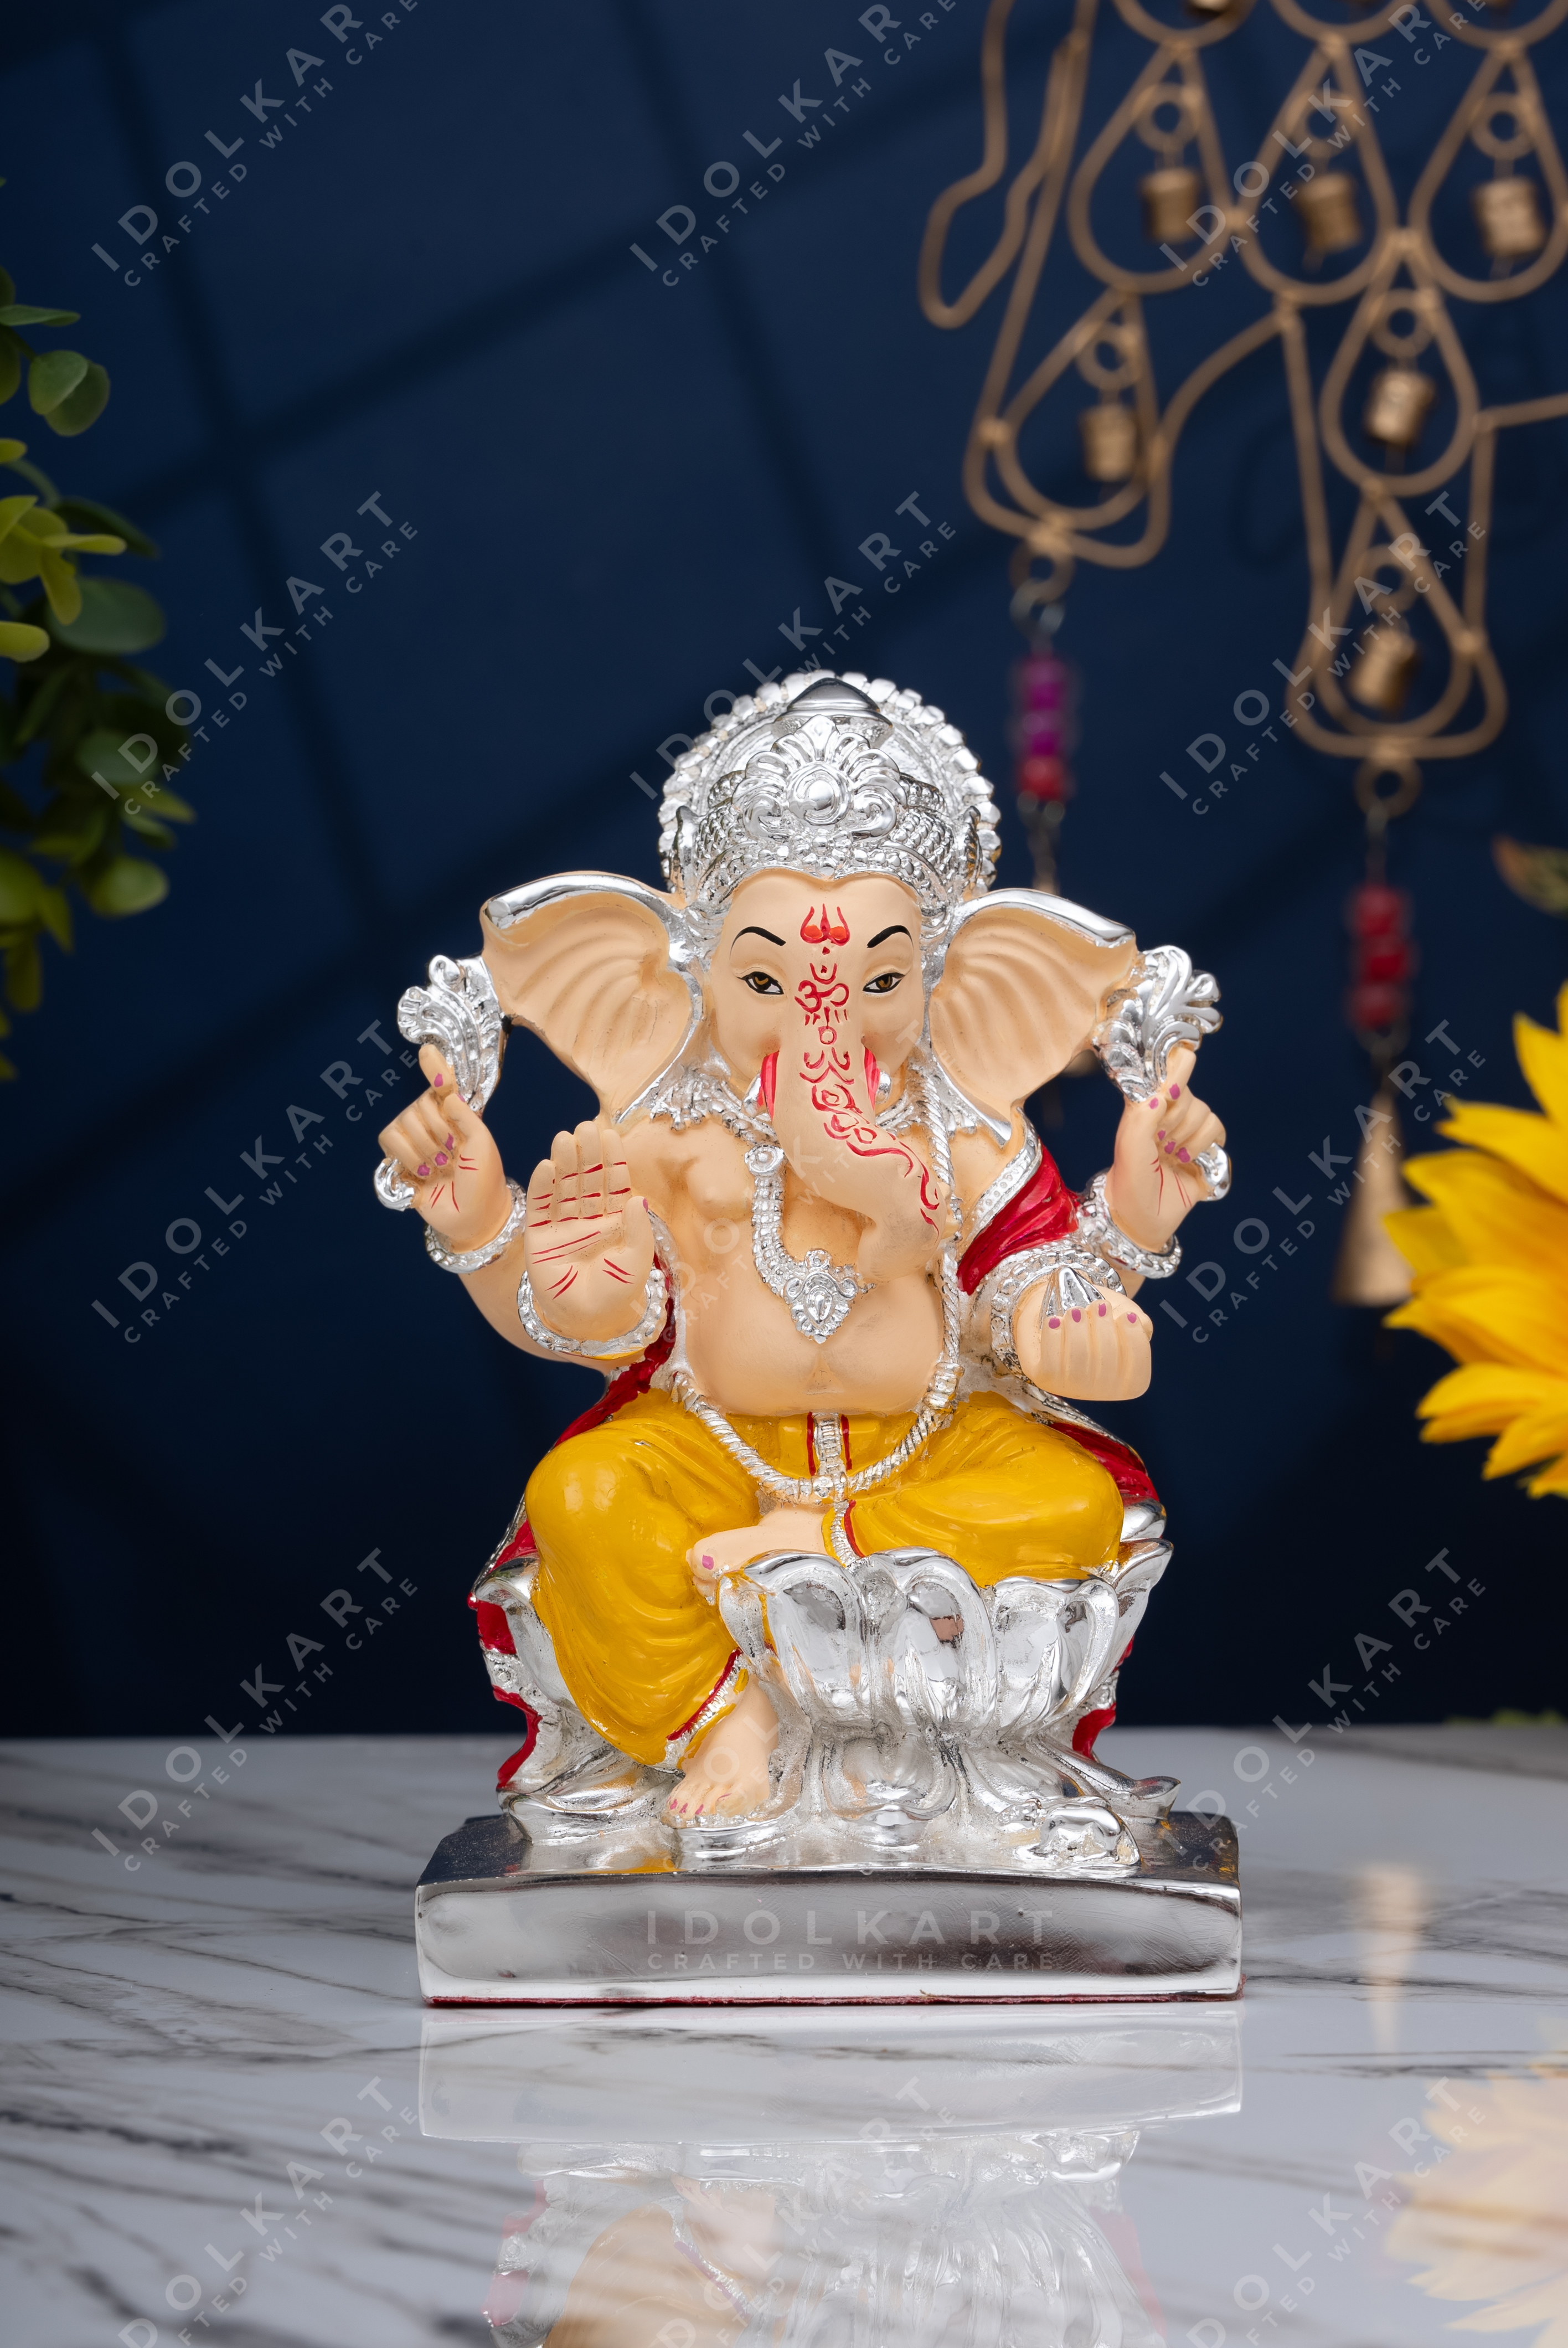 Ganesh Chaturthi Gifts: Vinayak Chaturthi Gifts Online, Ganesh Idols